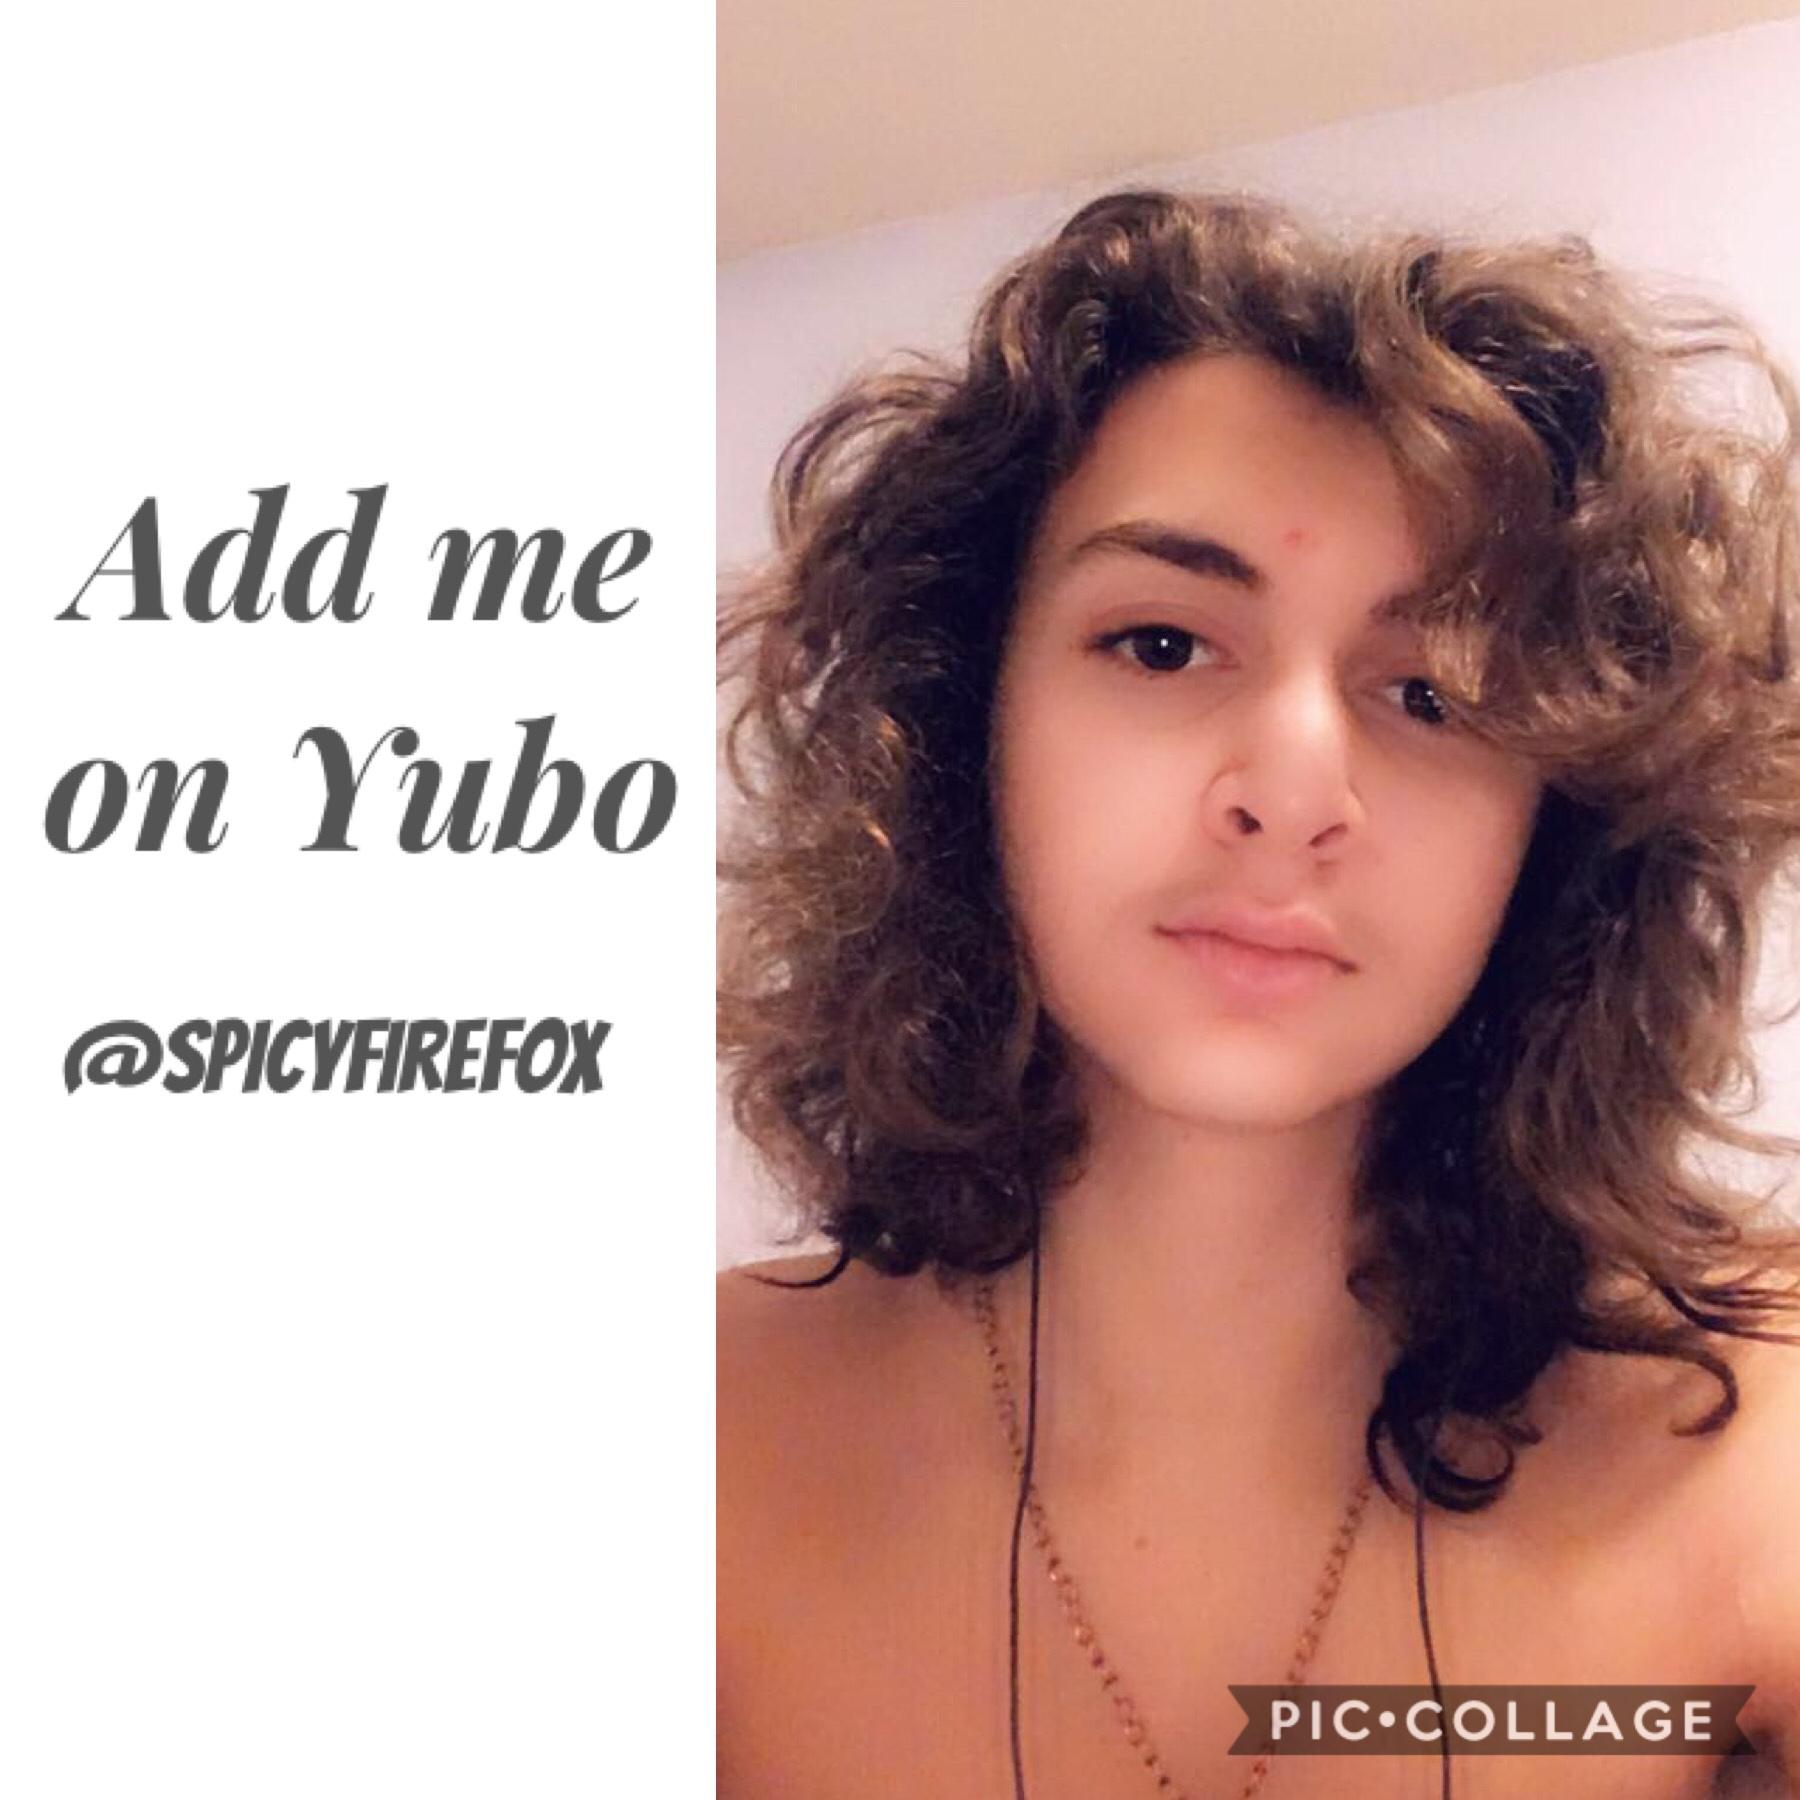 Add me on the Yubo app. My username is @SpicyFireFox